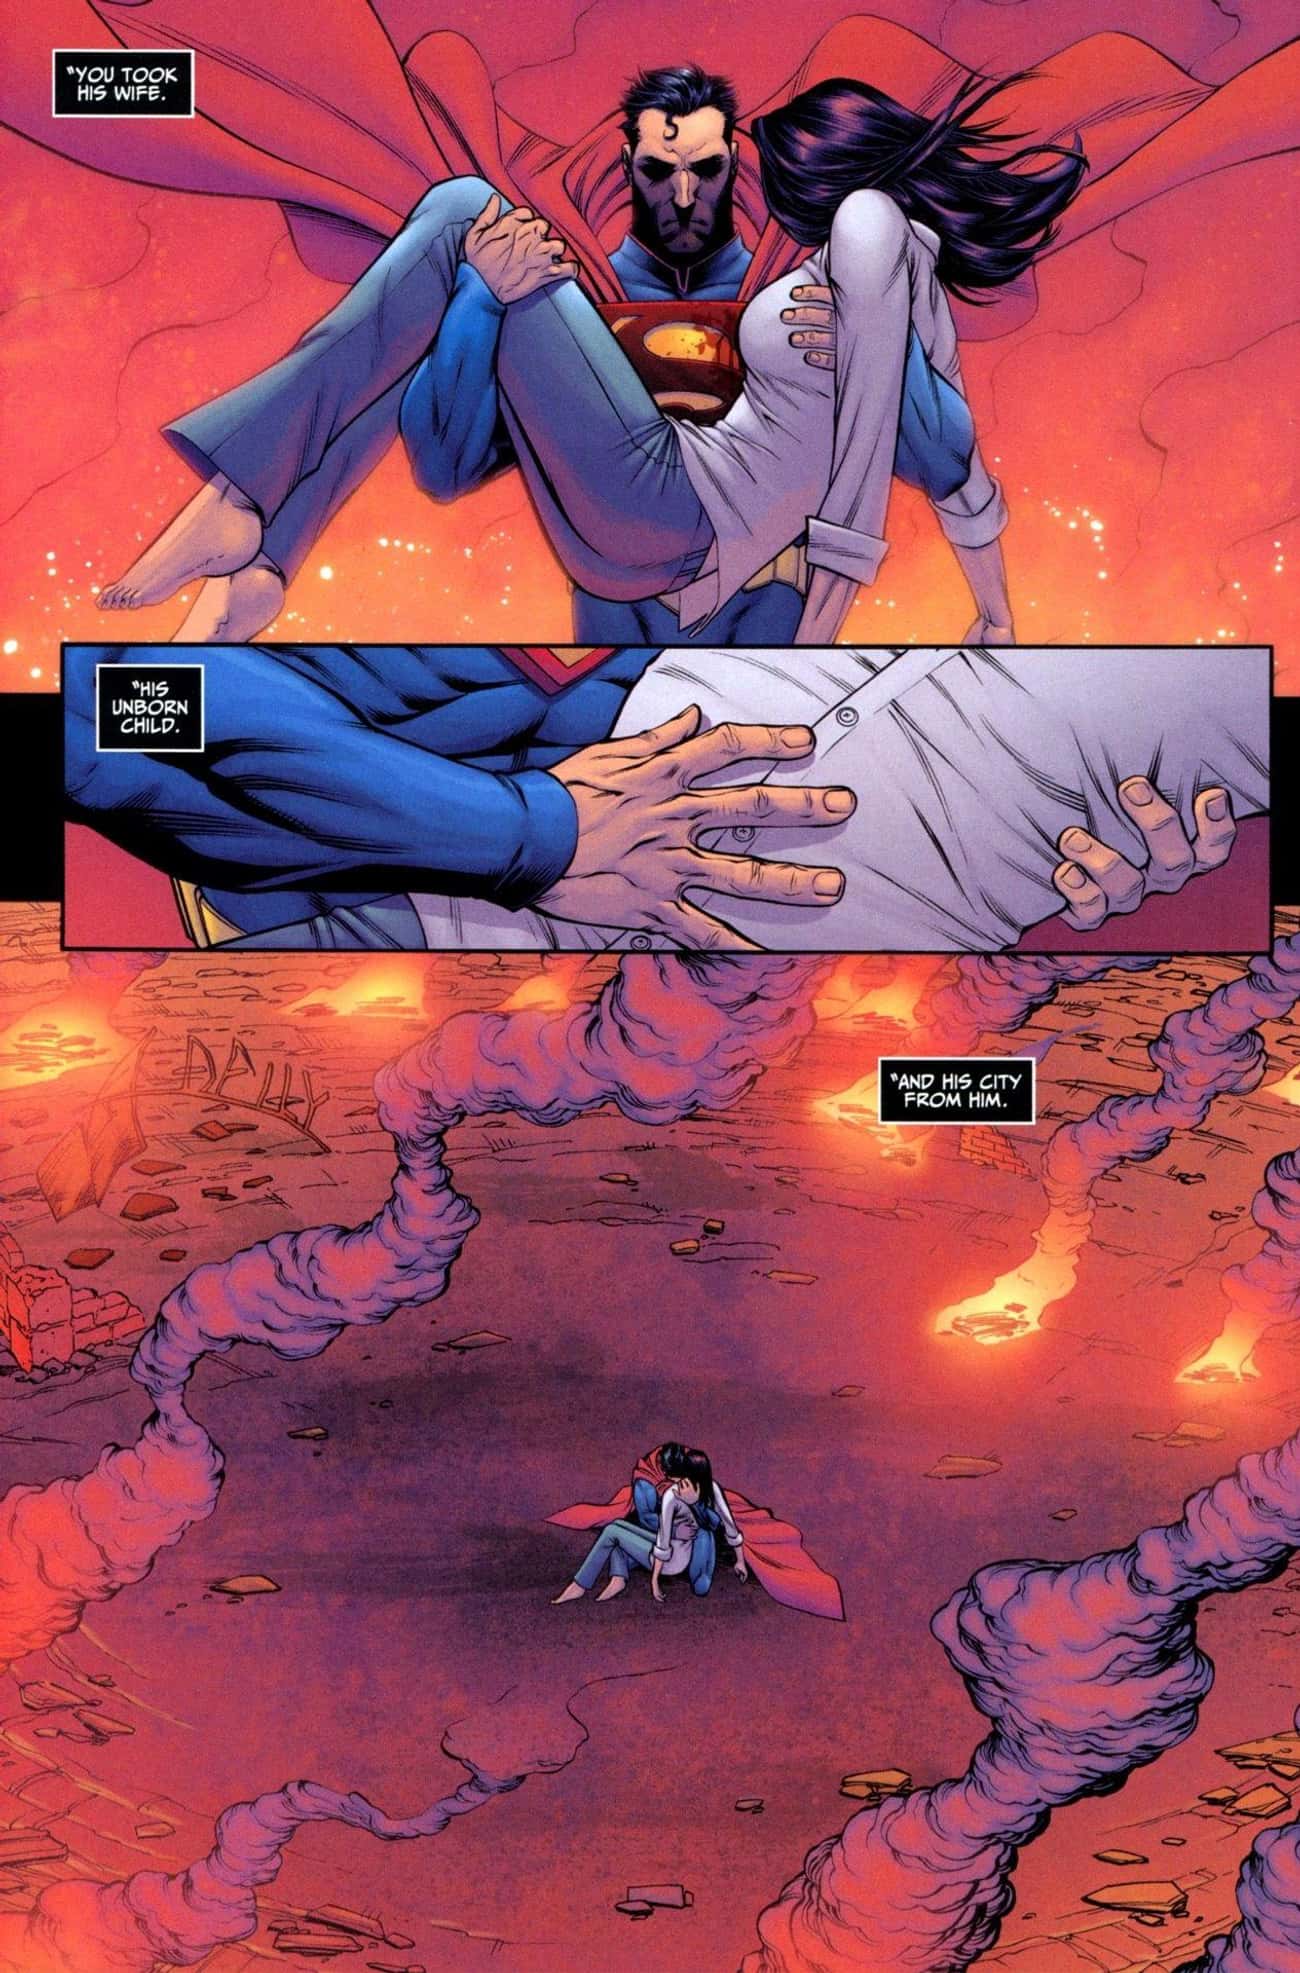 Joker Tricked Superman Into Beating Lois Lane To Death, Then Nuked Metropolis